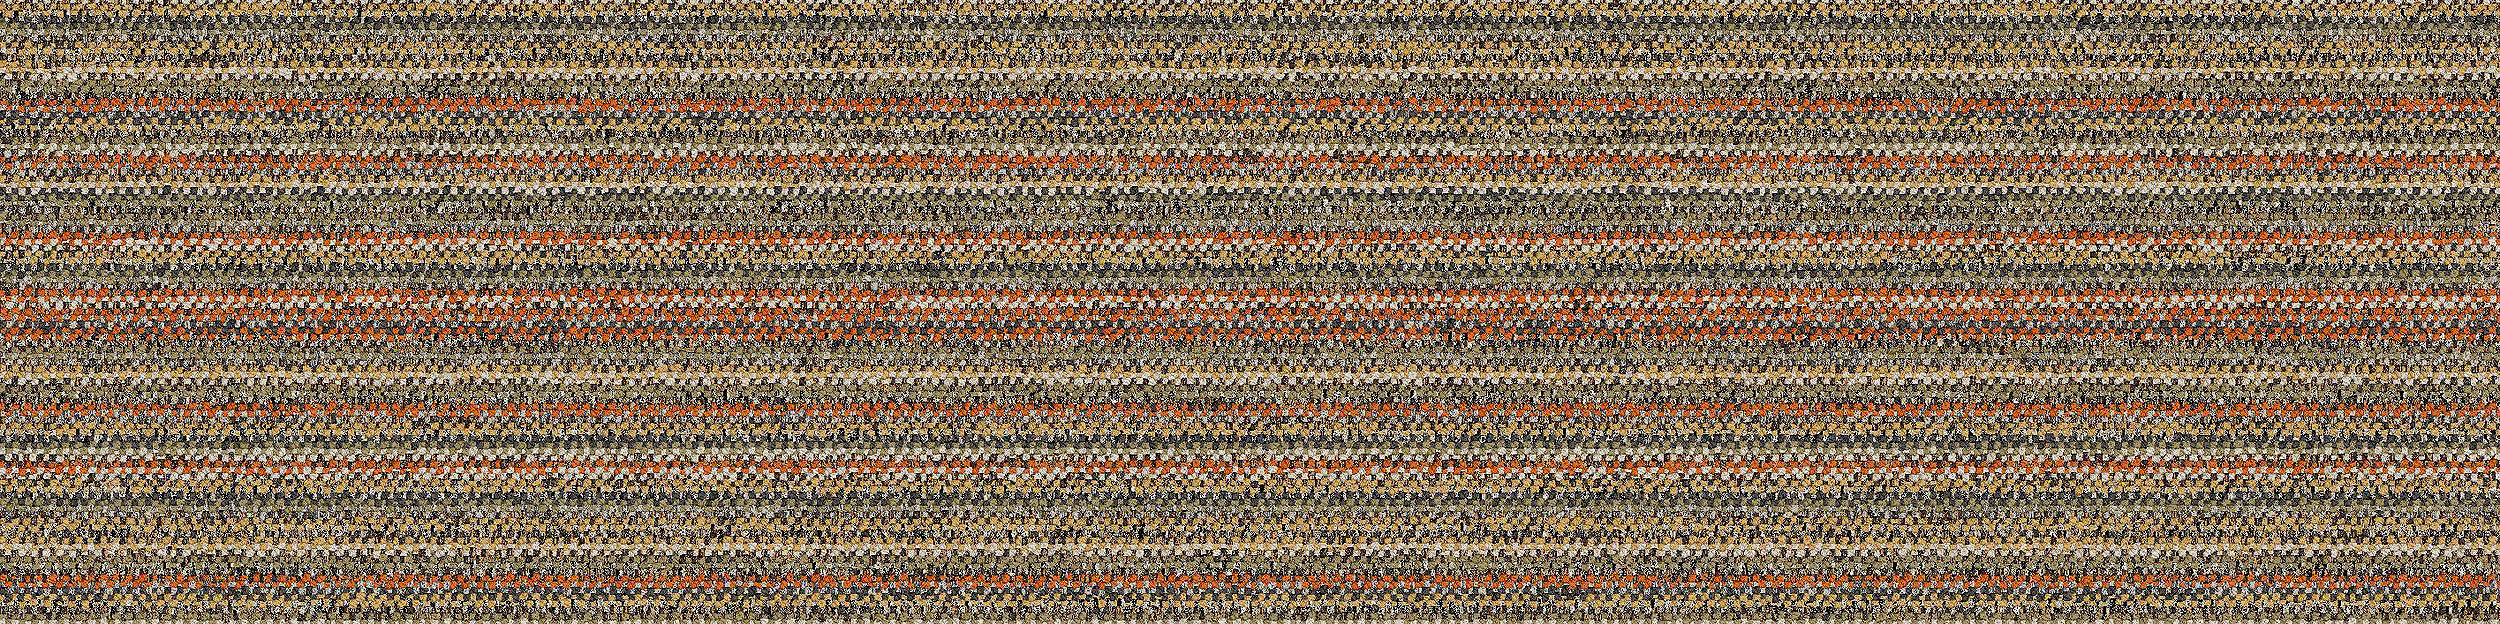 WW865 Carpet Tile In Autumn Warp número de imagen 9